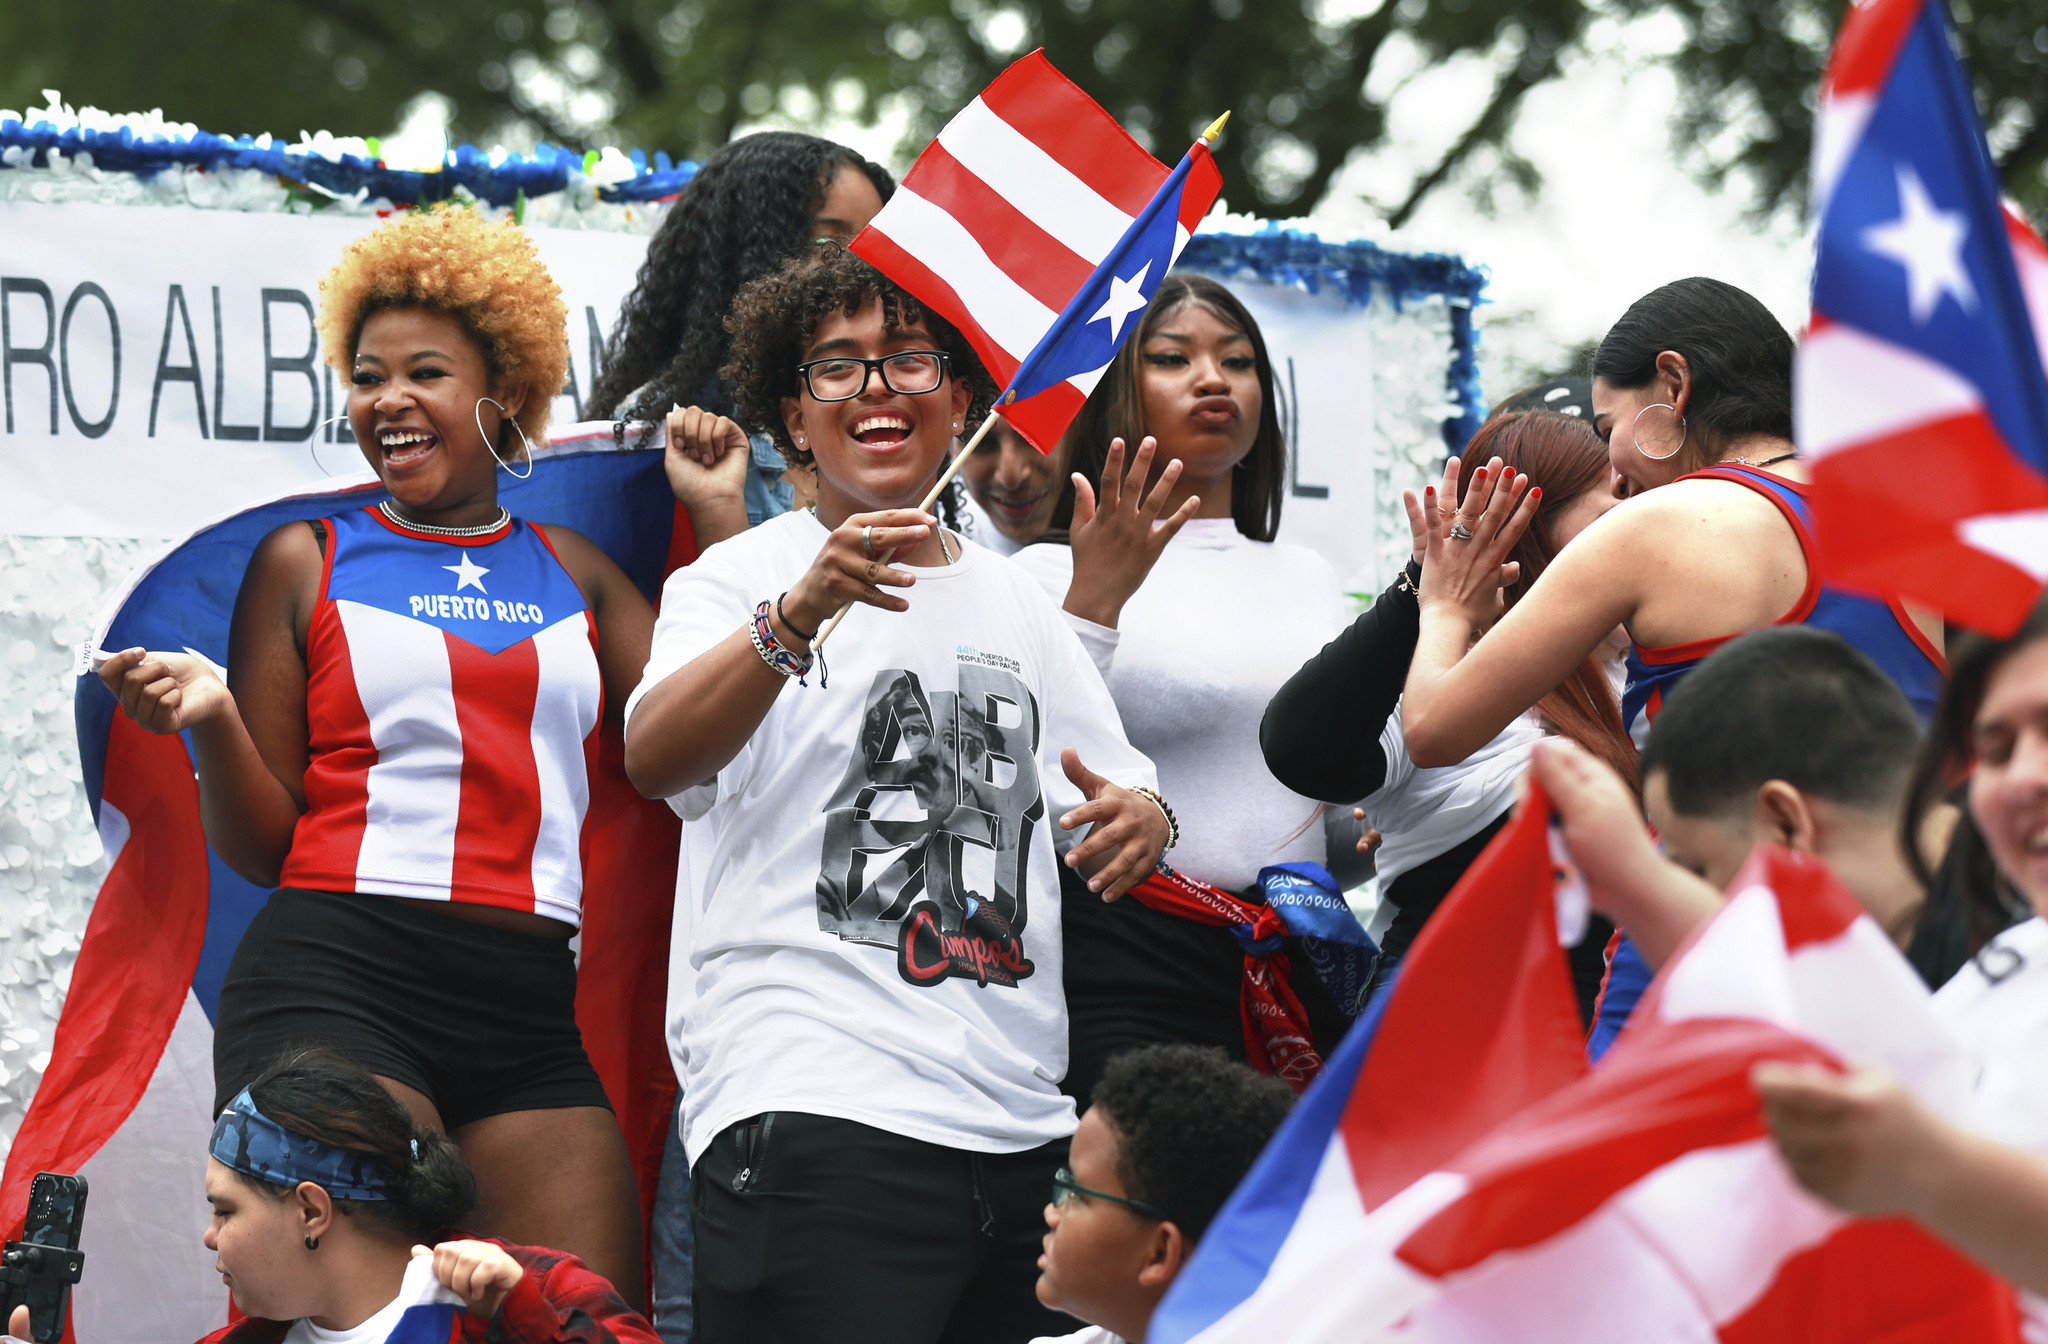 Puerto Rican Celebration